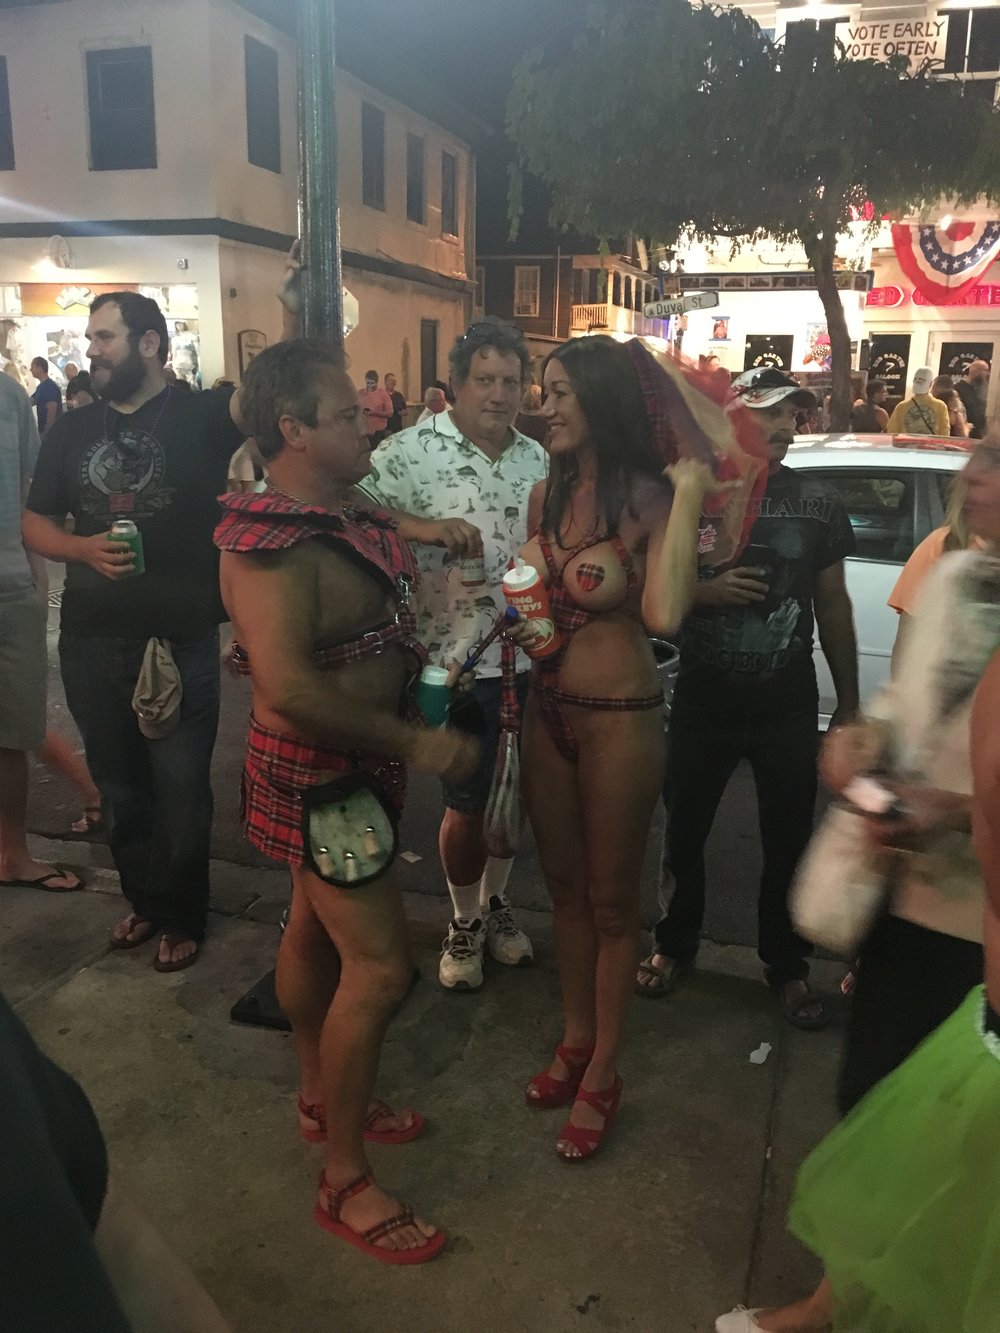  fantasy fest 2016 key west crowd shots pictures body paint nudity 